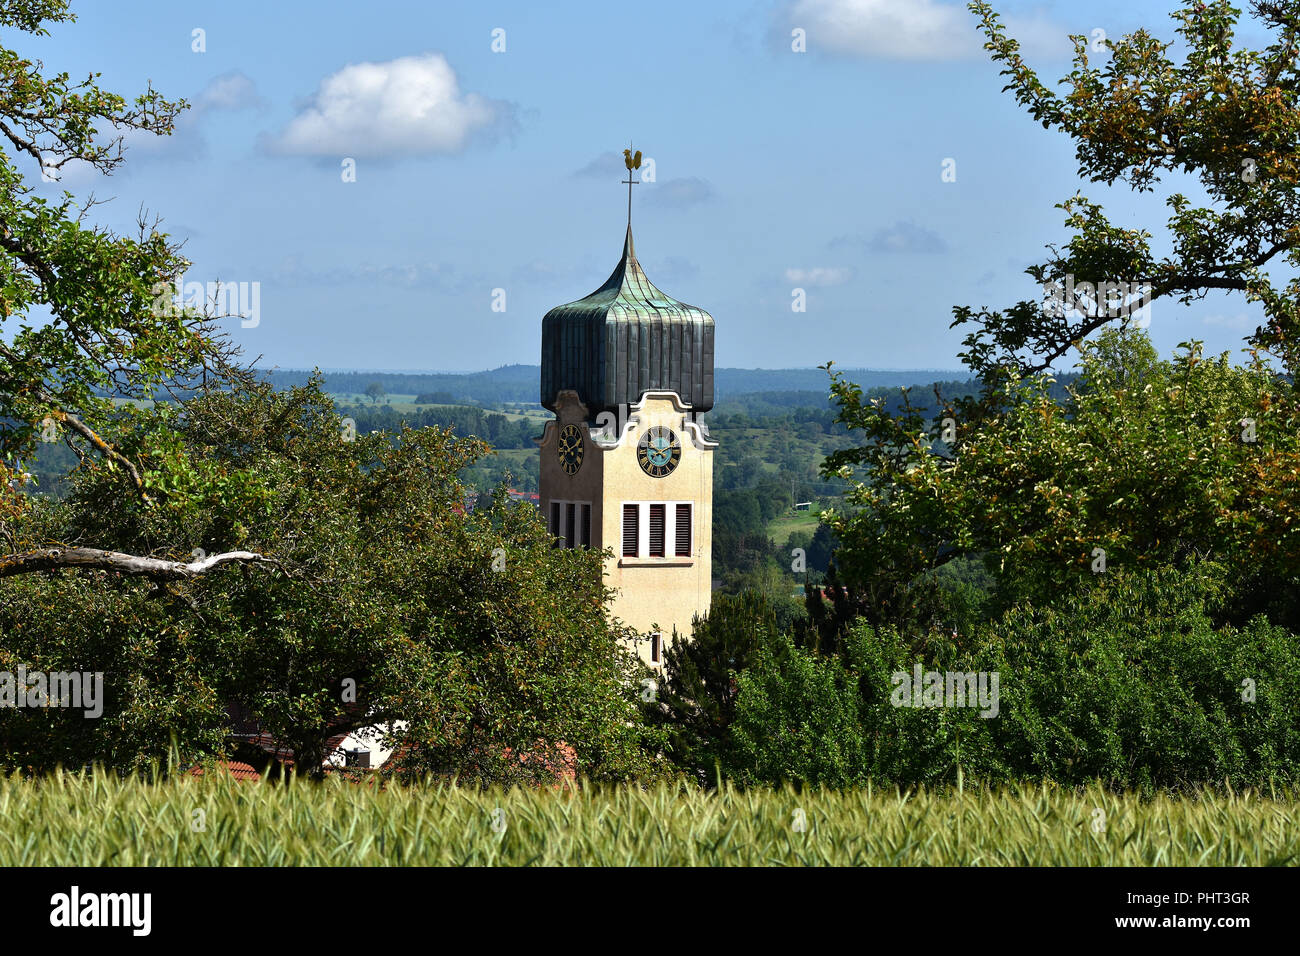 church steeple; church tower; bulbous spire; Germany; Stock Photo